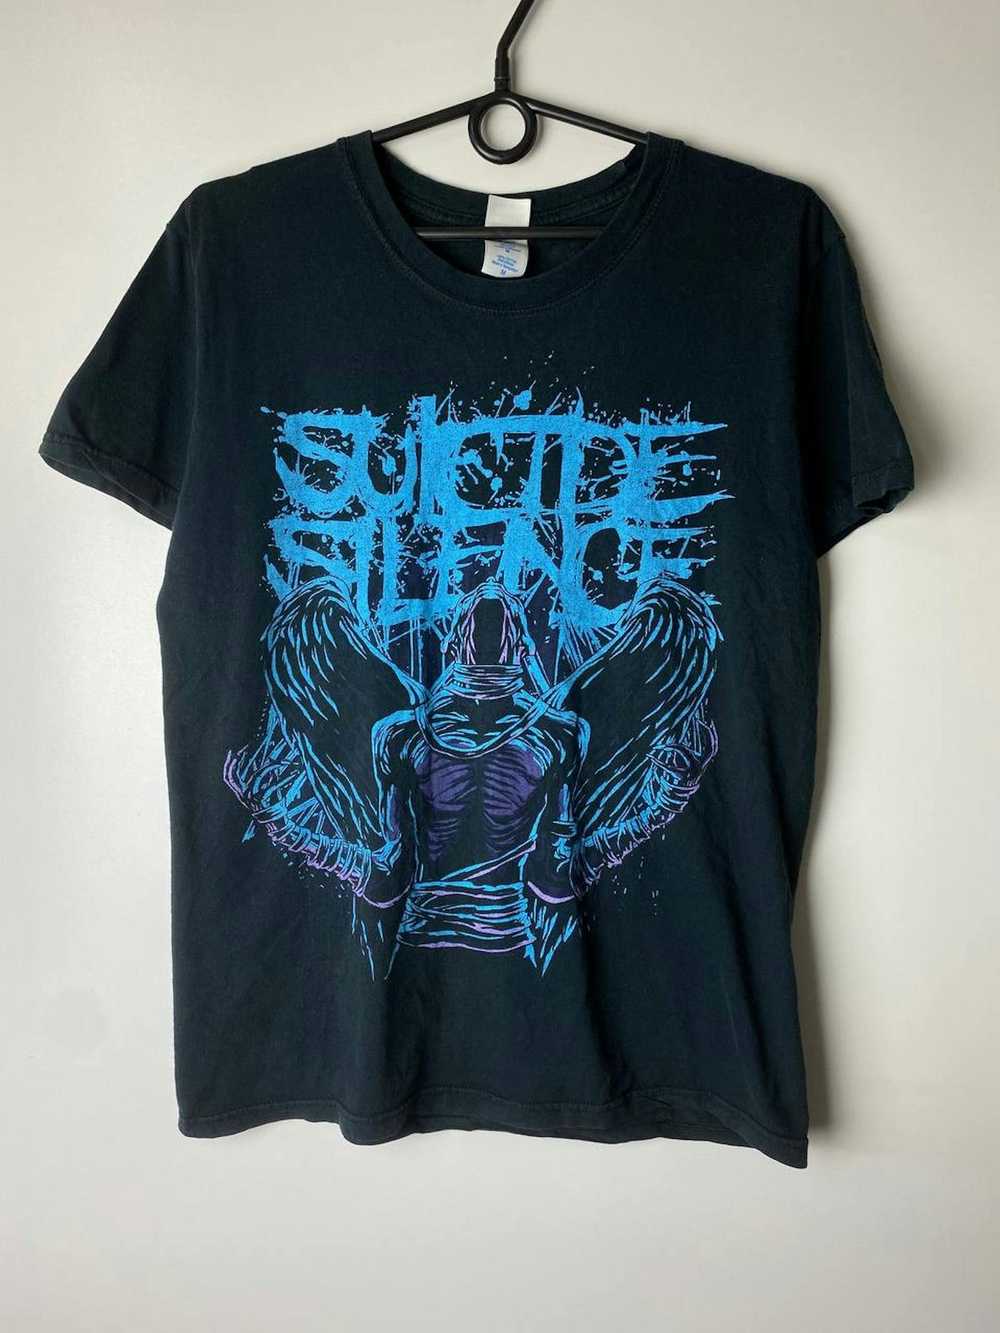 Vintage Suicide Silence vintage t-shirt size M - image 1